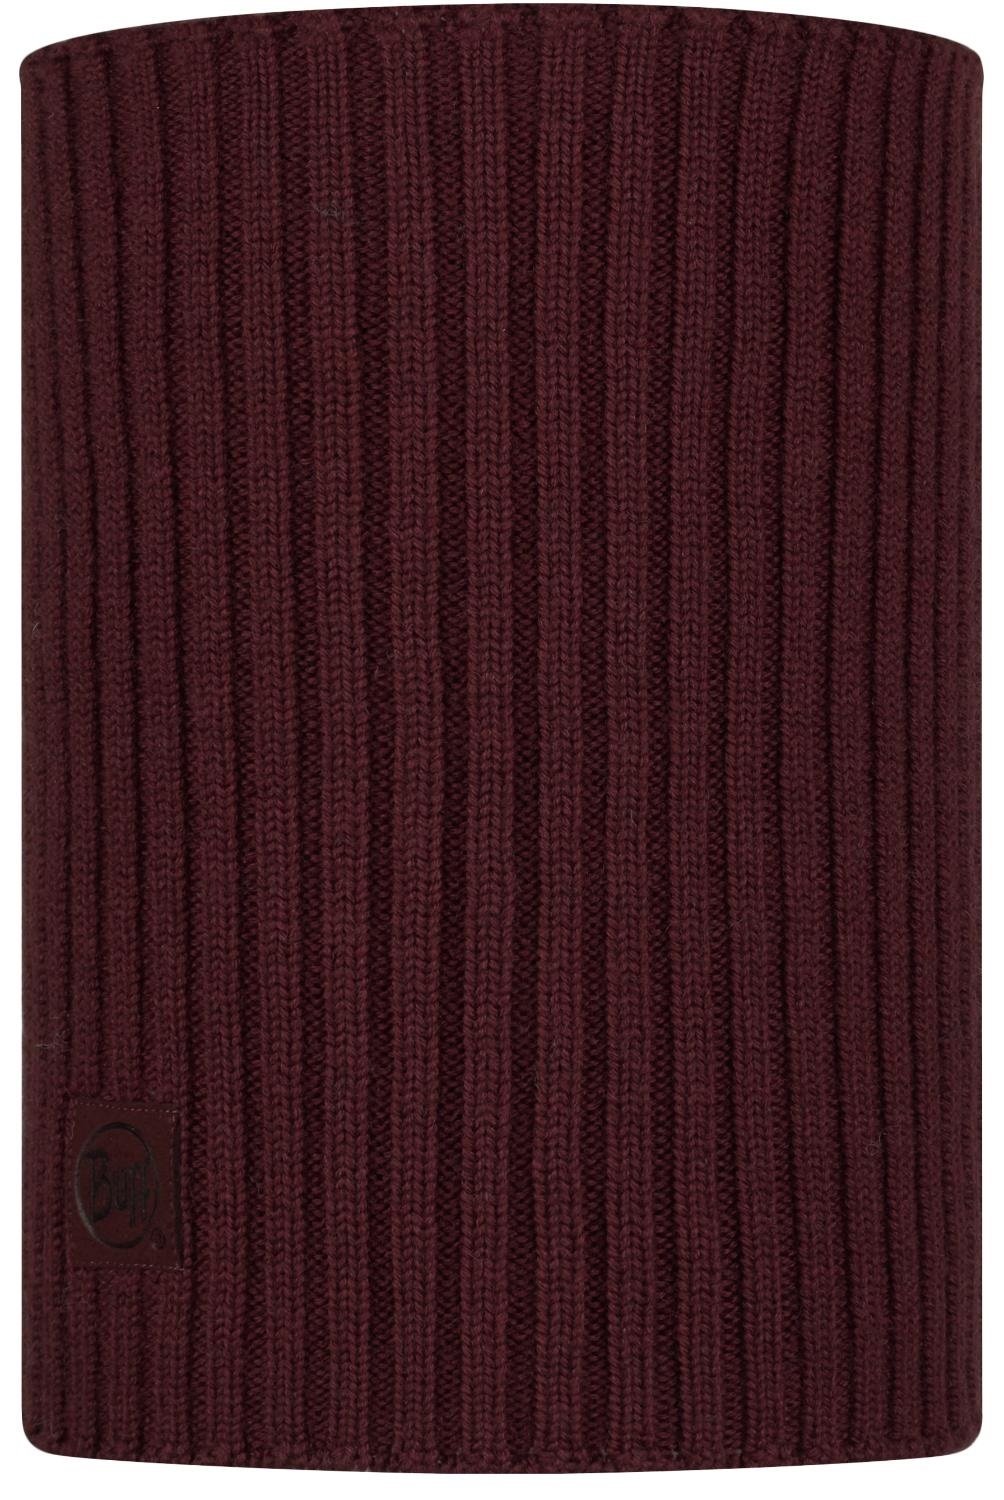 Шарф Buff Knitted Neckwarmer Comfort Norval Maroon, US:one size, 124244.632.10.00 шарф buff knitted neckwarmer comfort norval honey us one size 124244 120 10 00